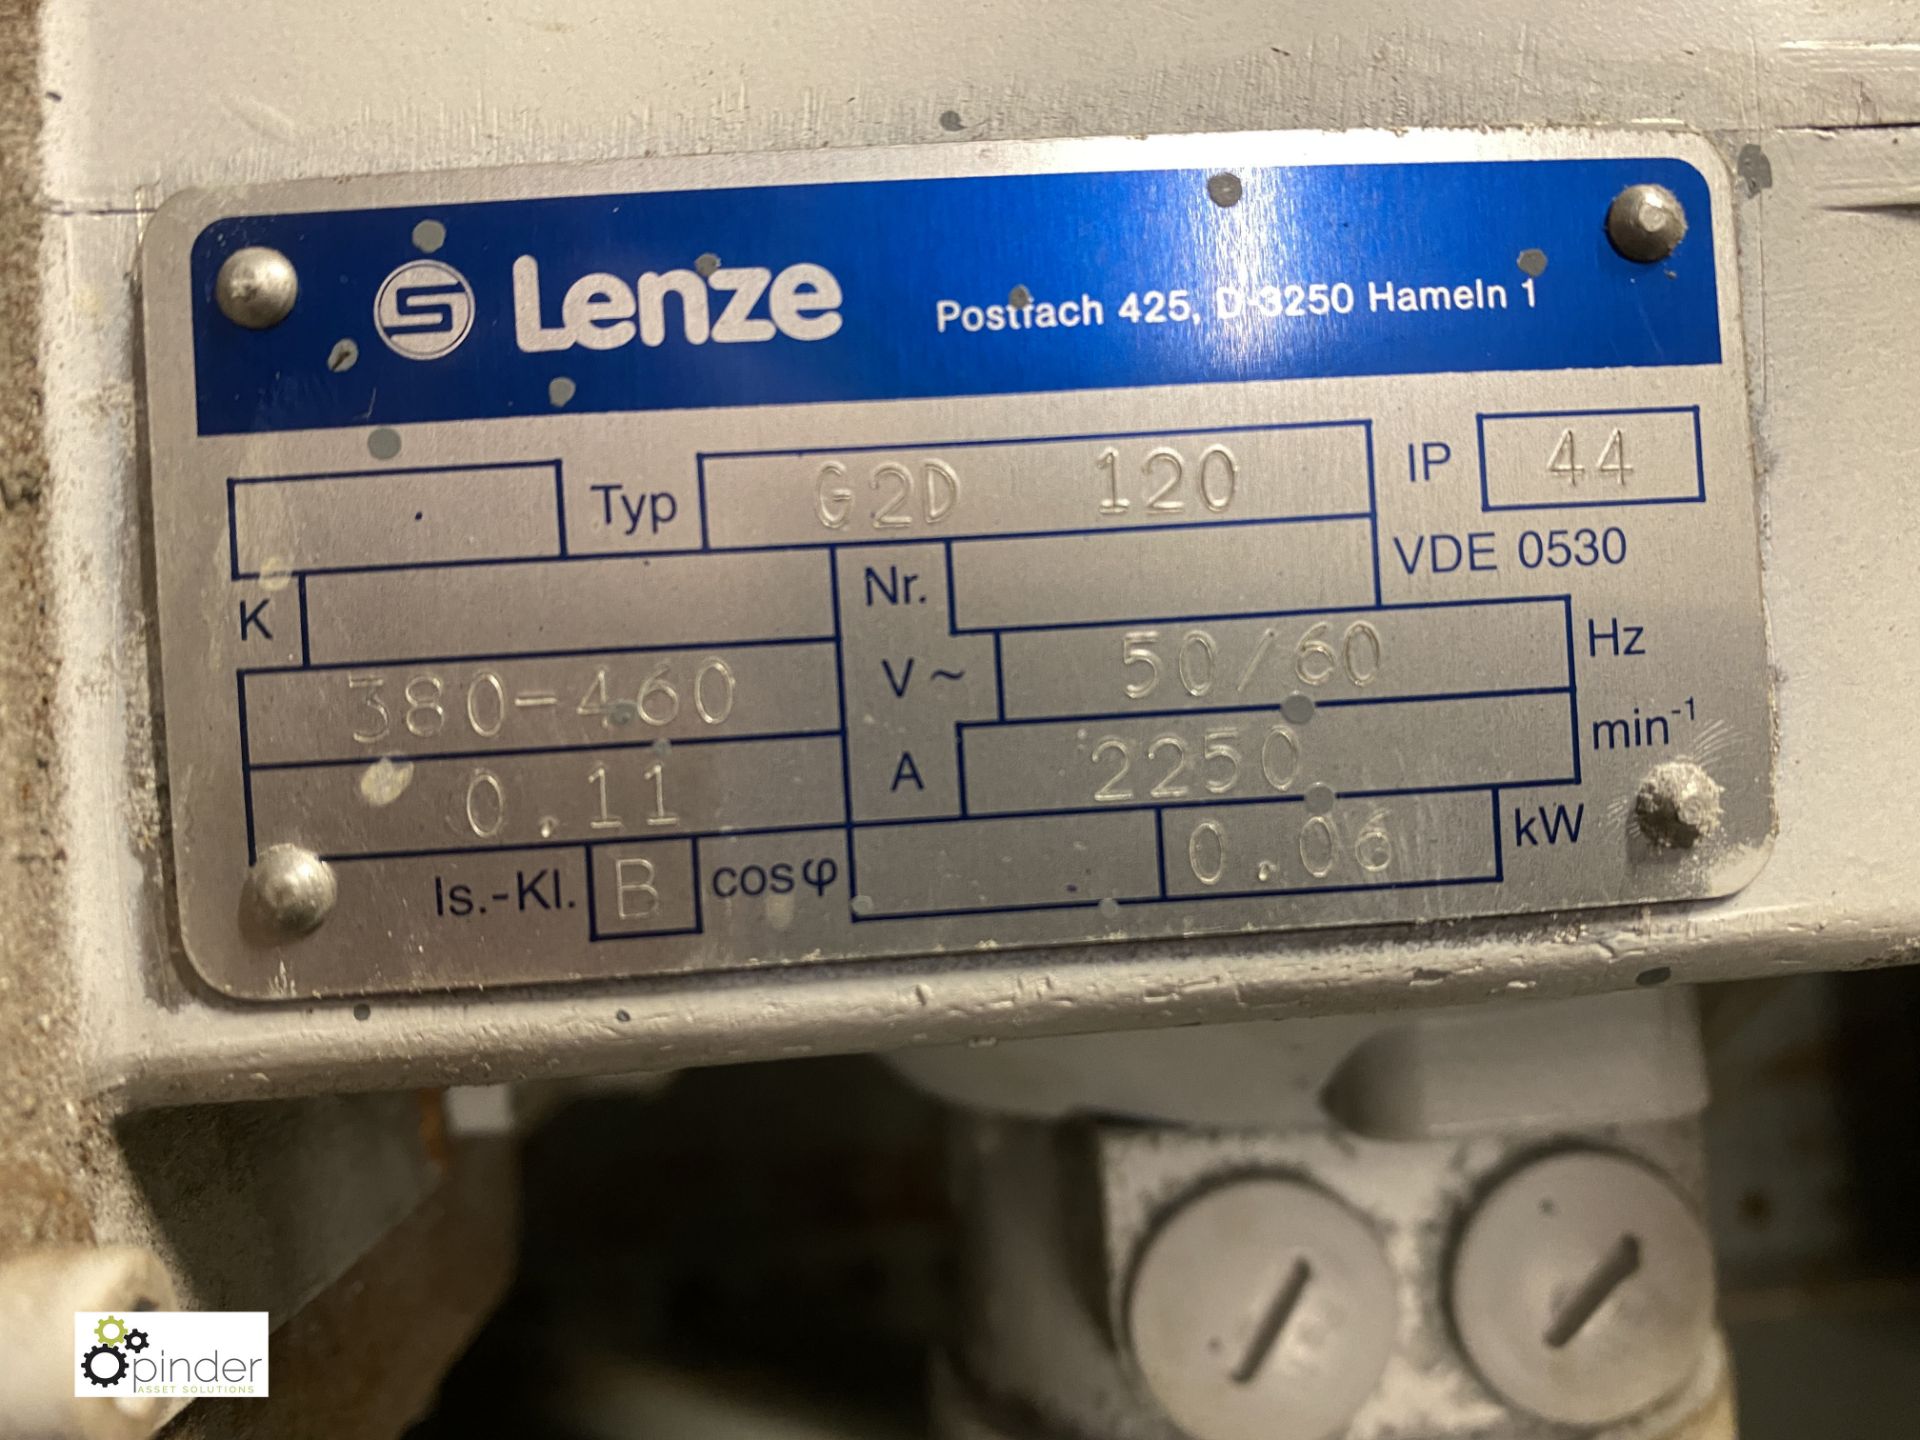 Lenze GFQ80-24 fan cooled Motor - Image 3 of 4